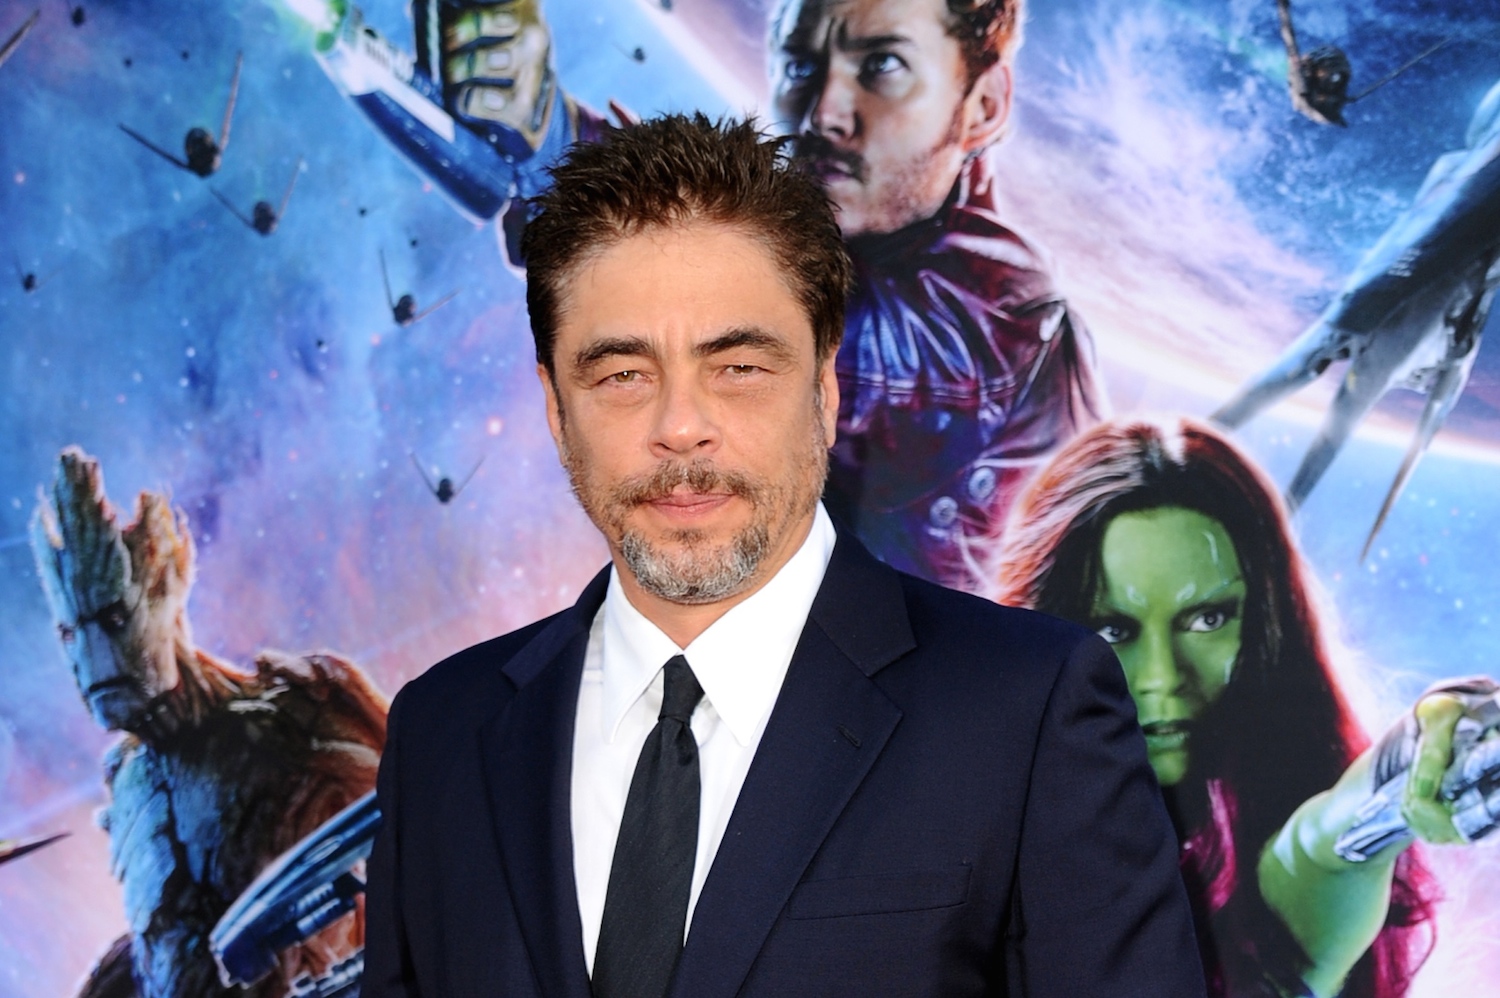 Interview: Zoe Saldana and Benicio del Toro Talk “Guardians Of The Galaxy”